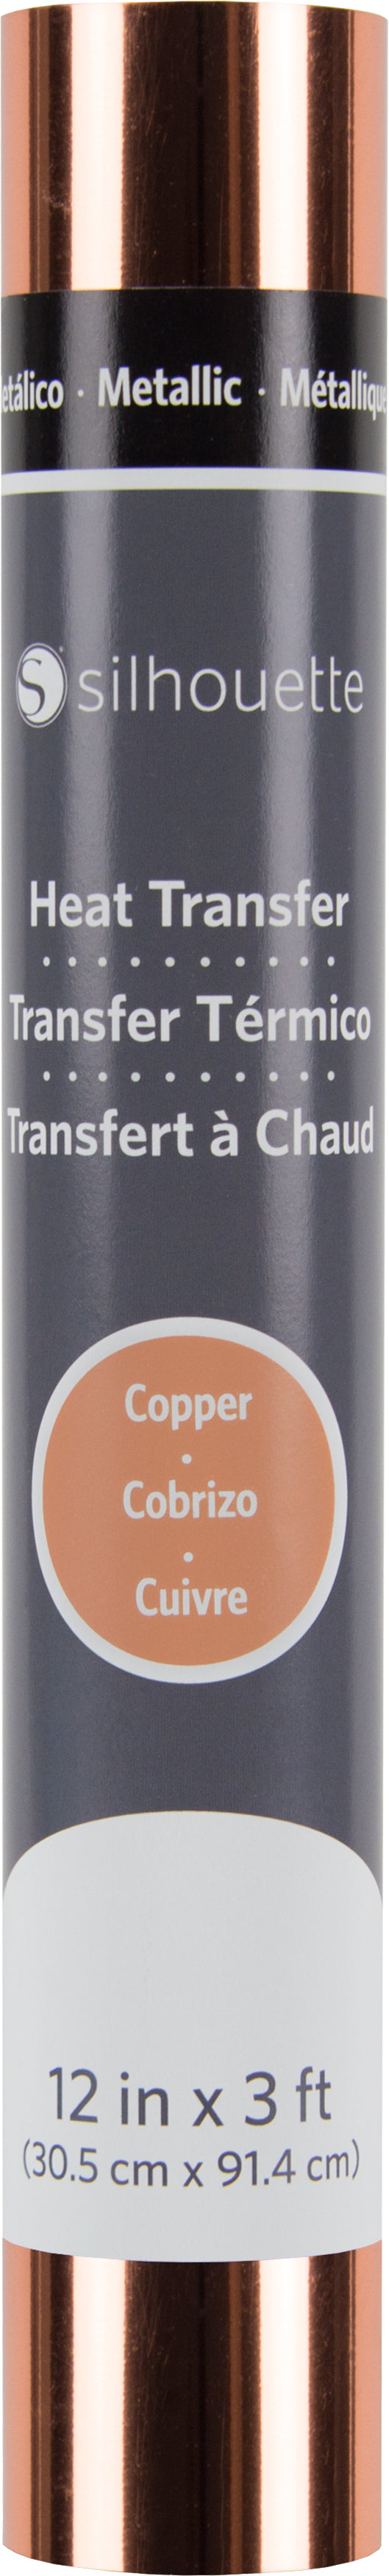 Silhouette Heat Transfer- Copper